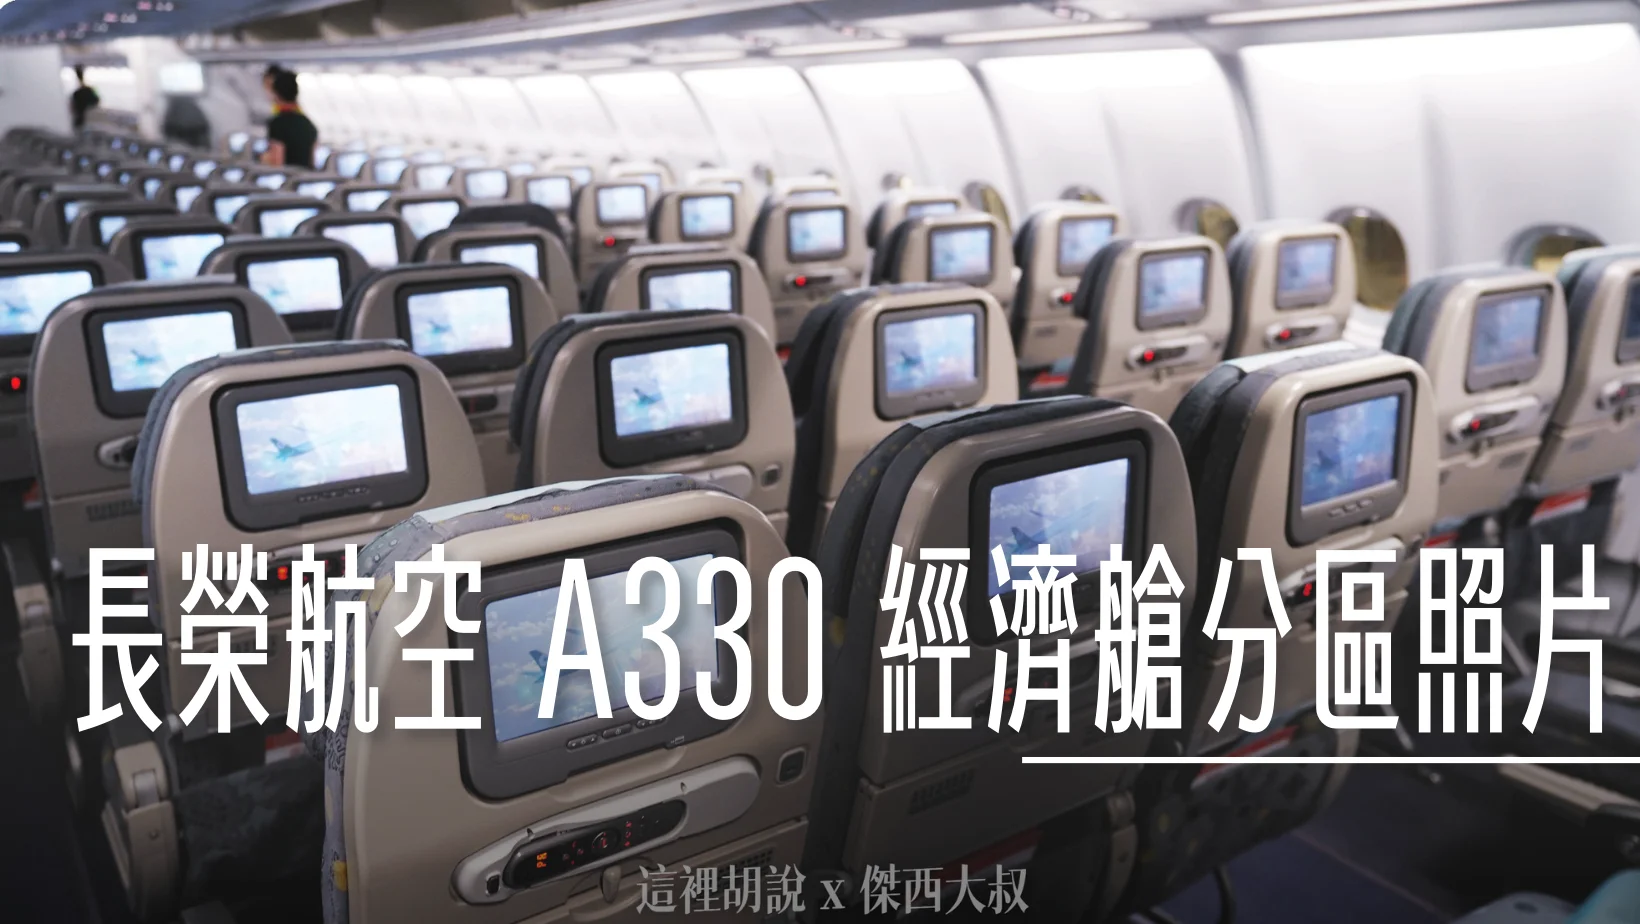 A330,A330-300,a330-300座位推薦,傑西飛行記錄,分區照片,商務艙,座位推薦,經濟艙,航空,選擇座位,長榮,長榮航空,頁首重點訊息 @傑西大叔 x 這裡胡說